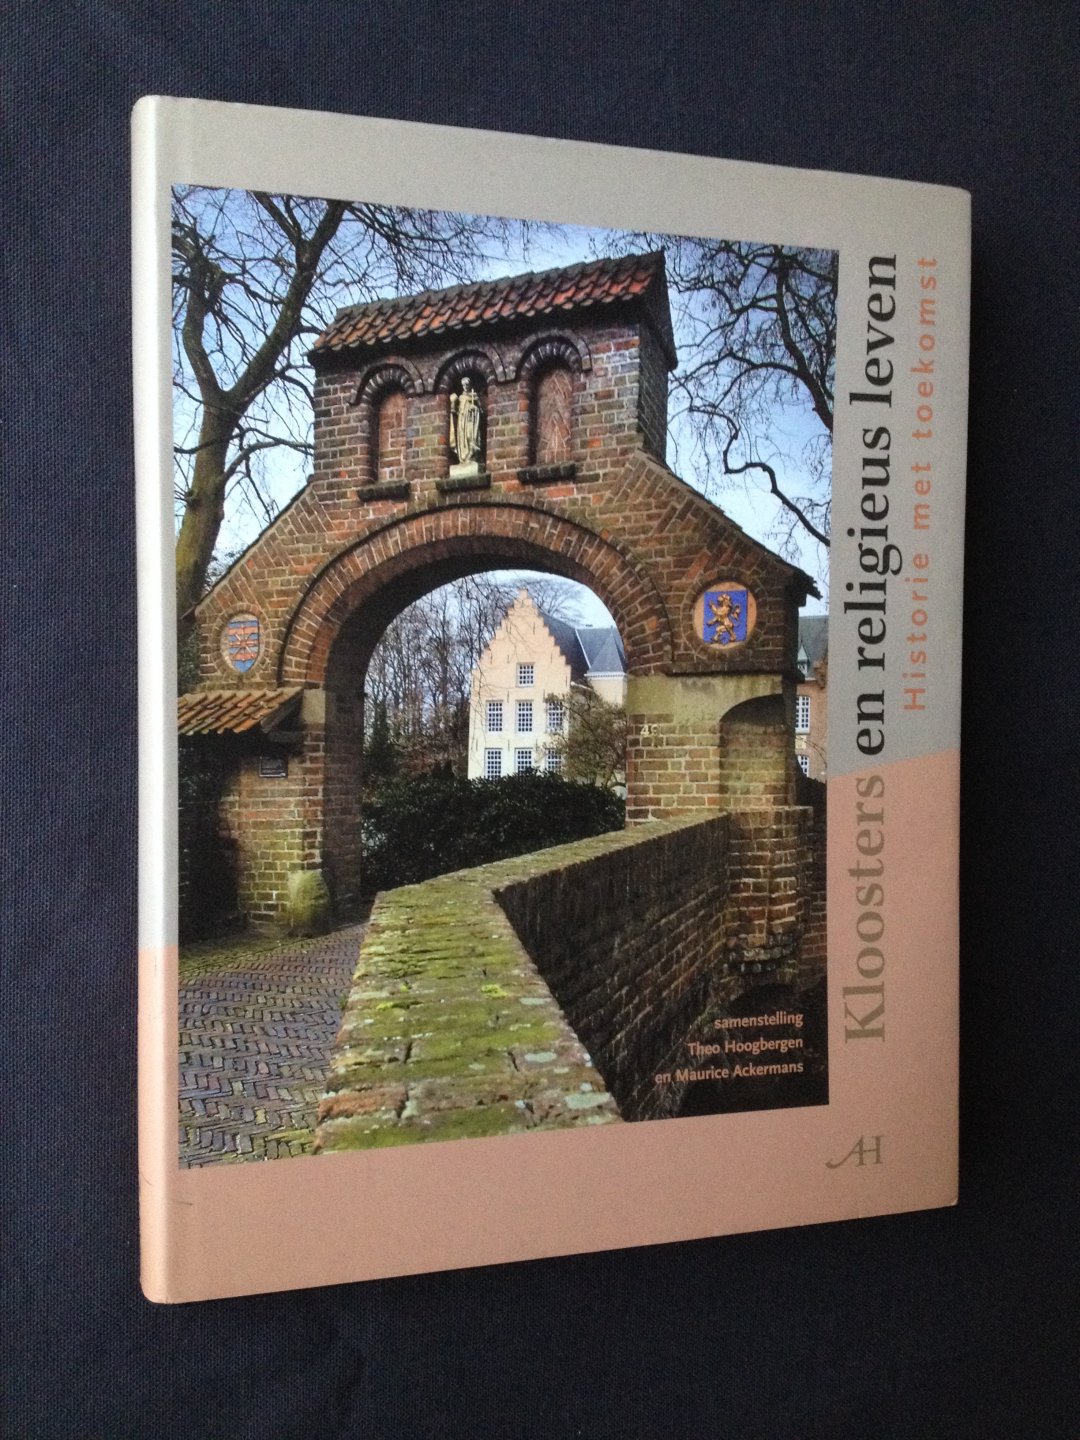 Ackermans, Maurice / Hoogbergen, Theo (samenstelling) - Kloosters en religieus leven. Historie met toekomst.